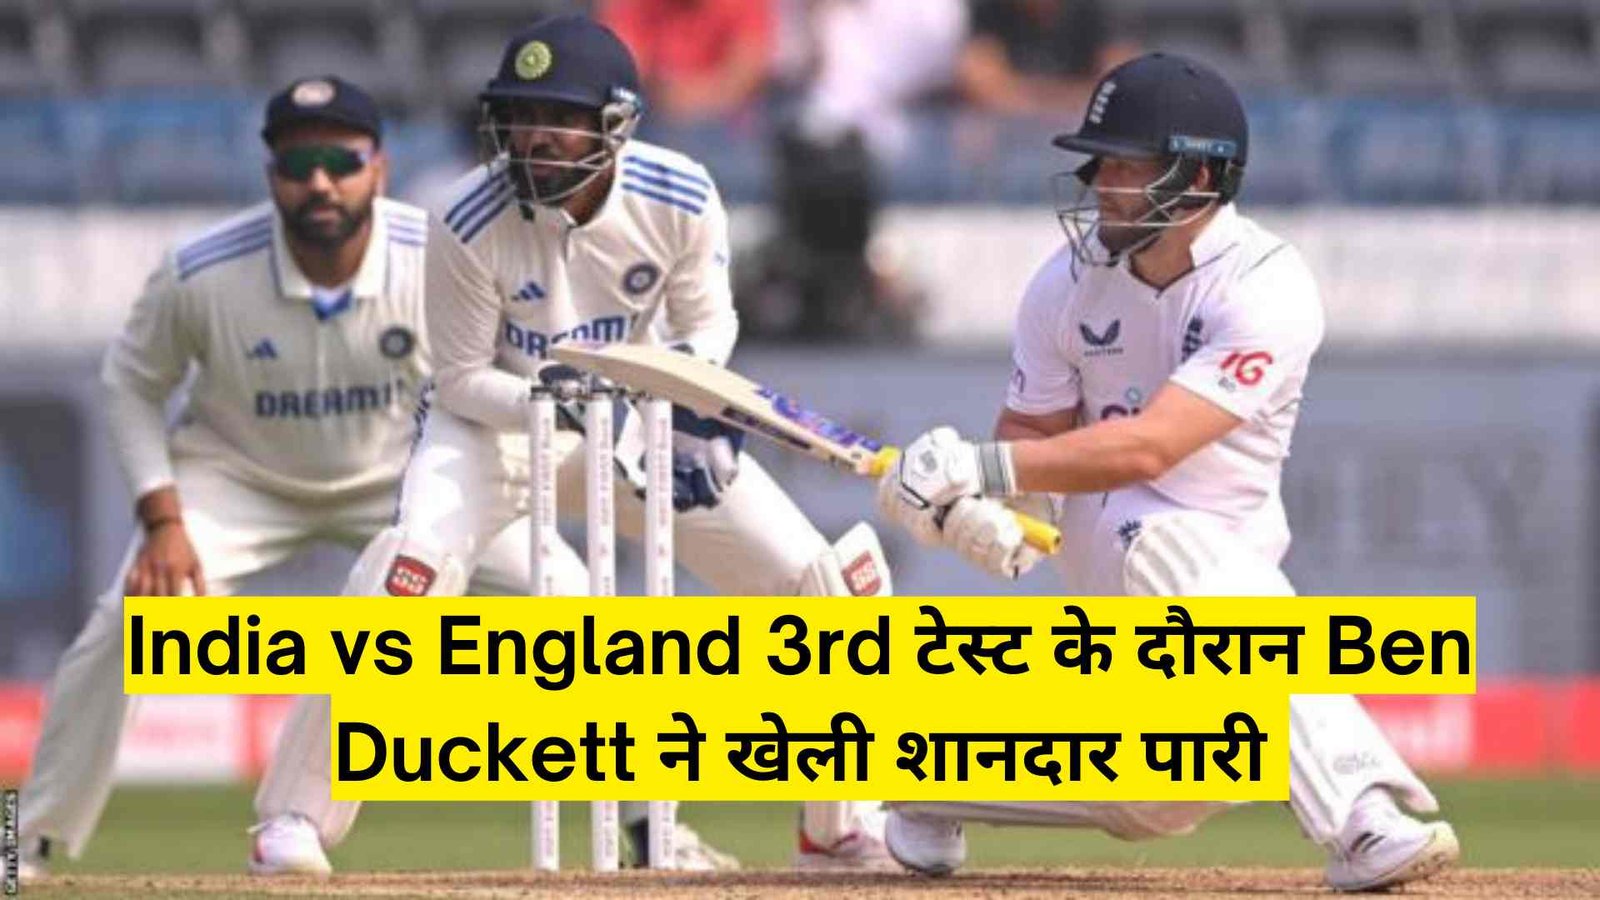 India vs England live Today 3rd Test का दूसरा दिन